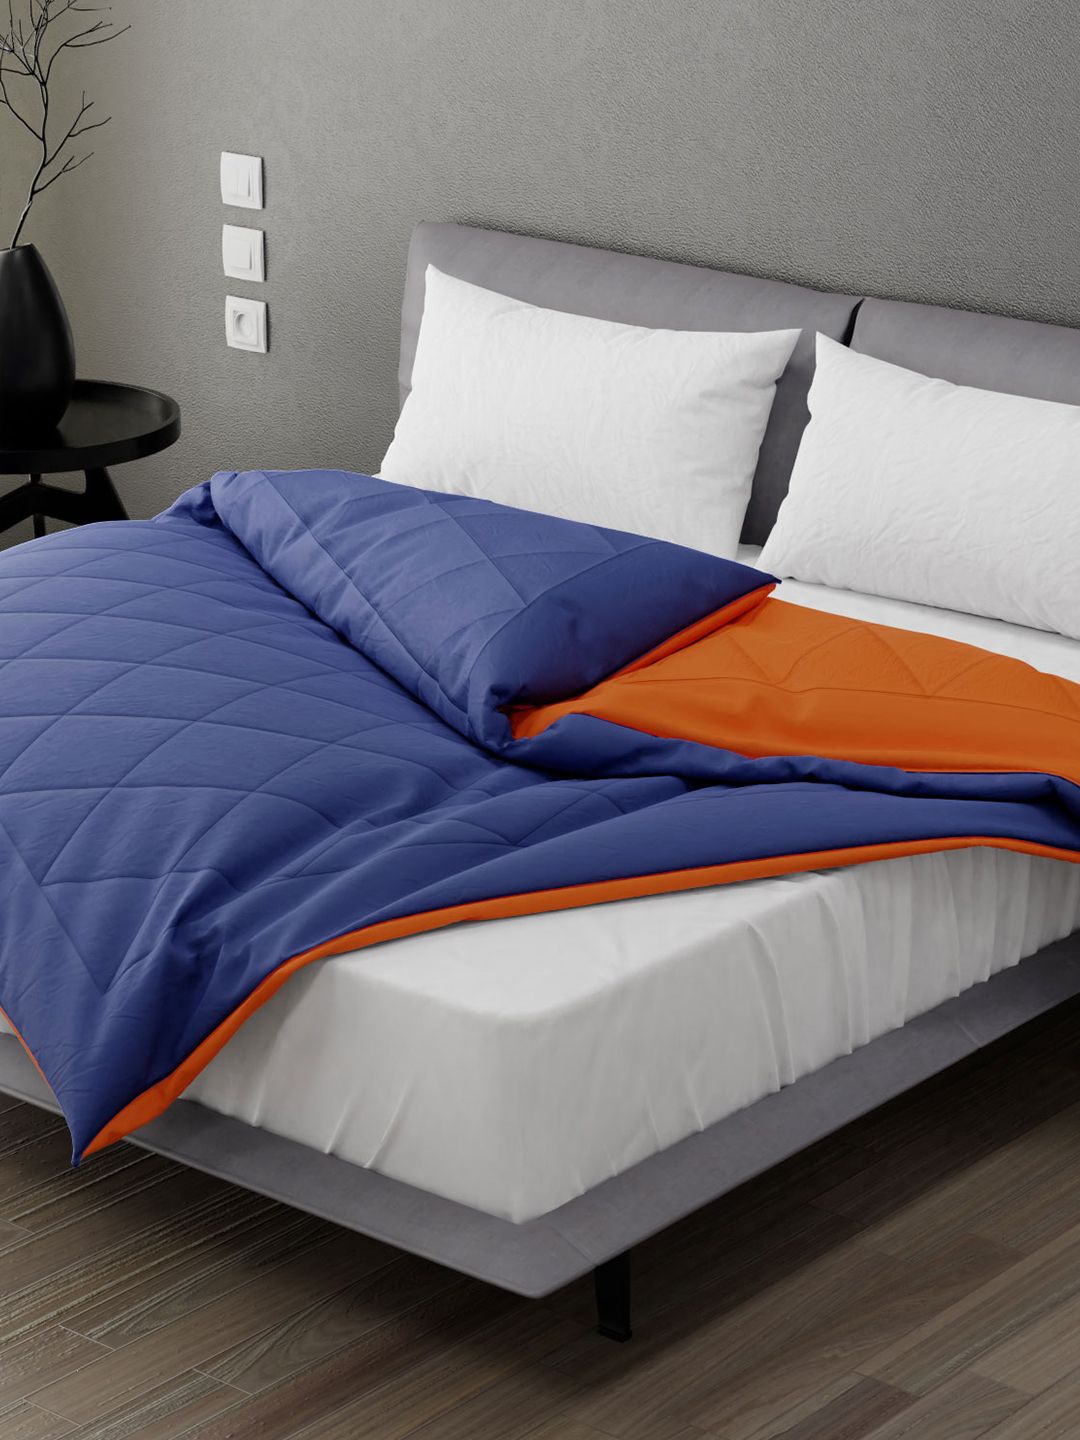 Stoa Paris Multicoloured AC Room Double Bed Reversible Microfibre Comforter Price in India